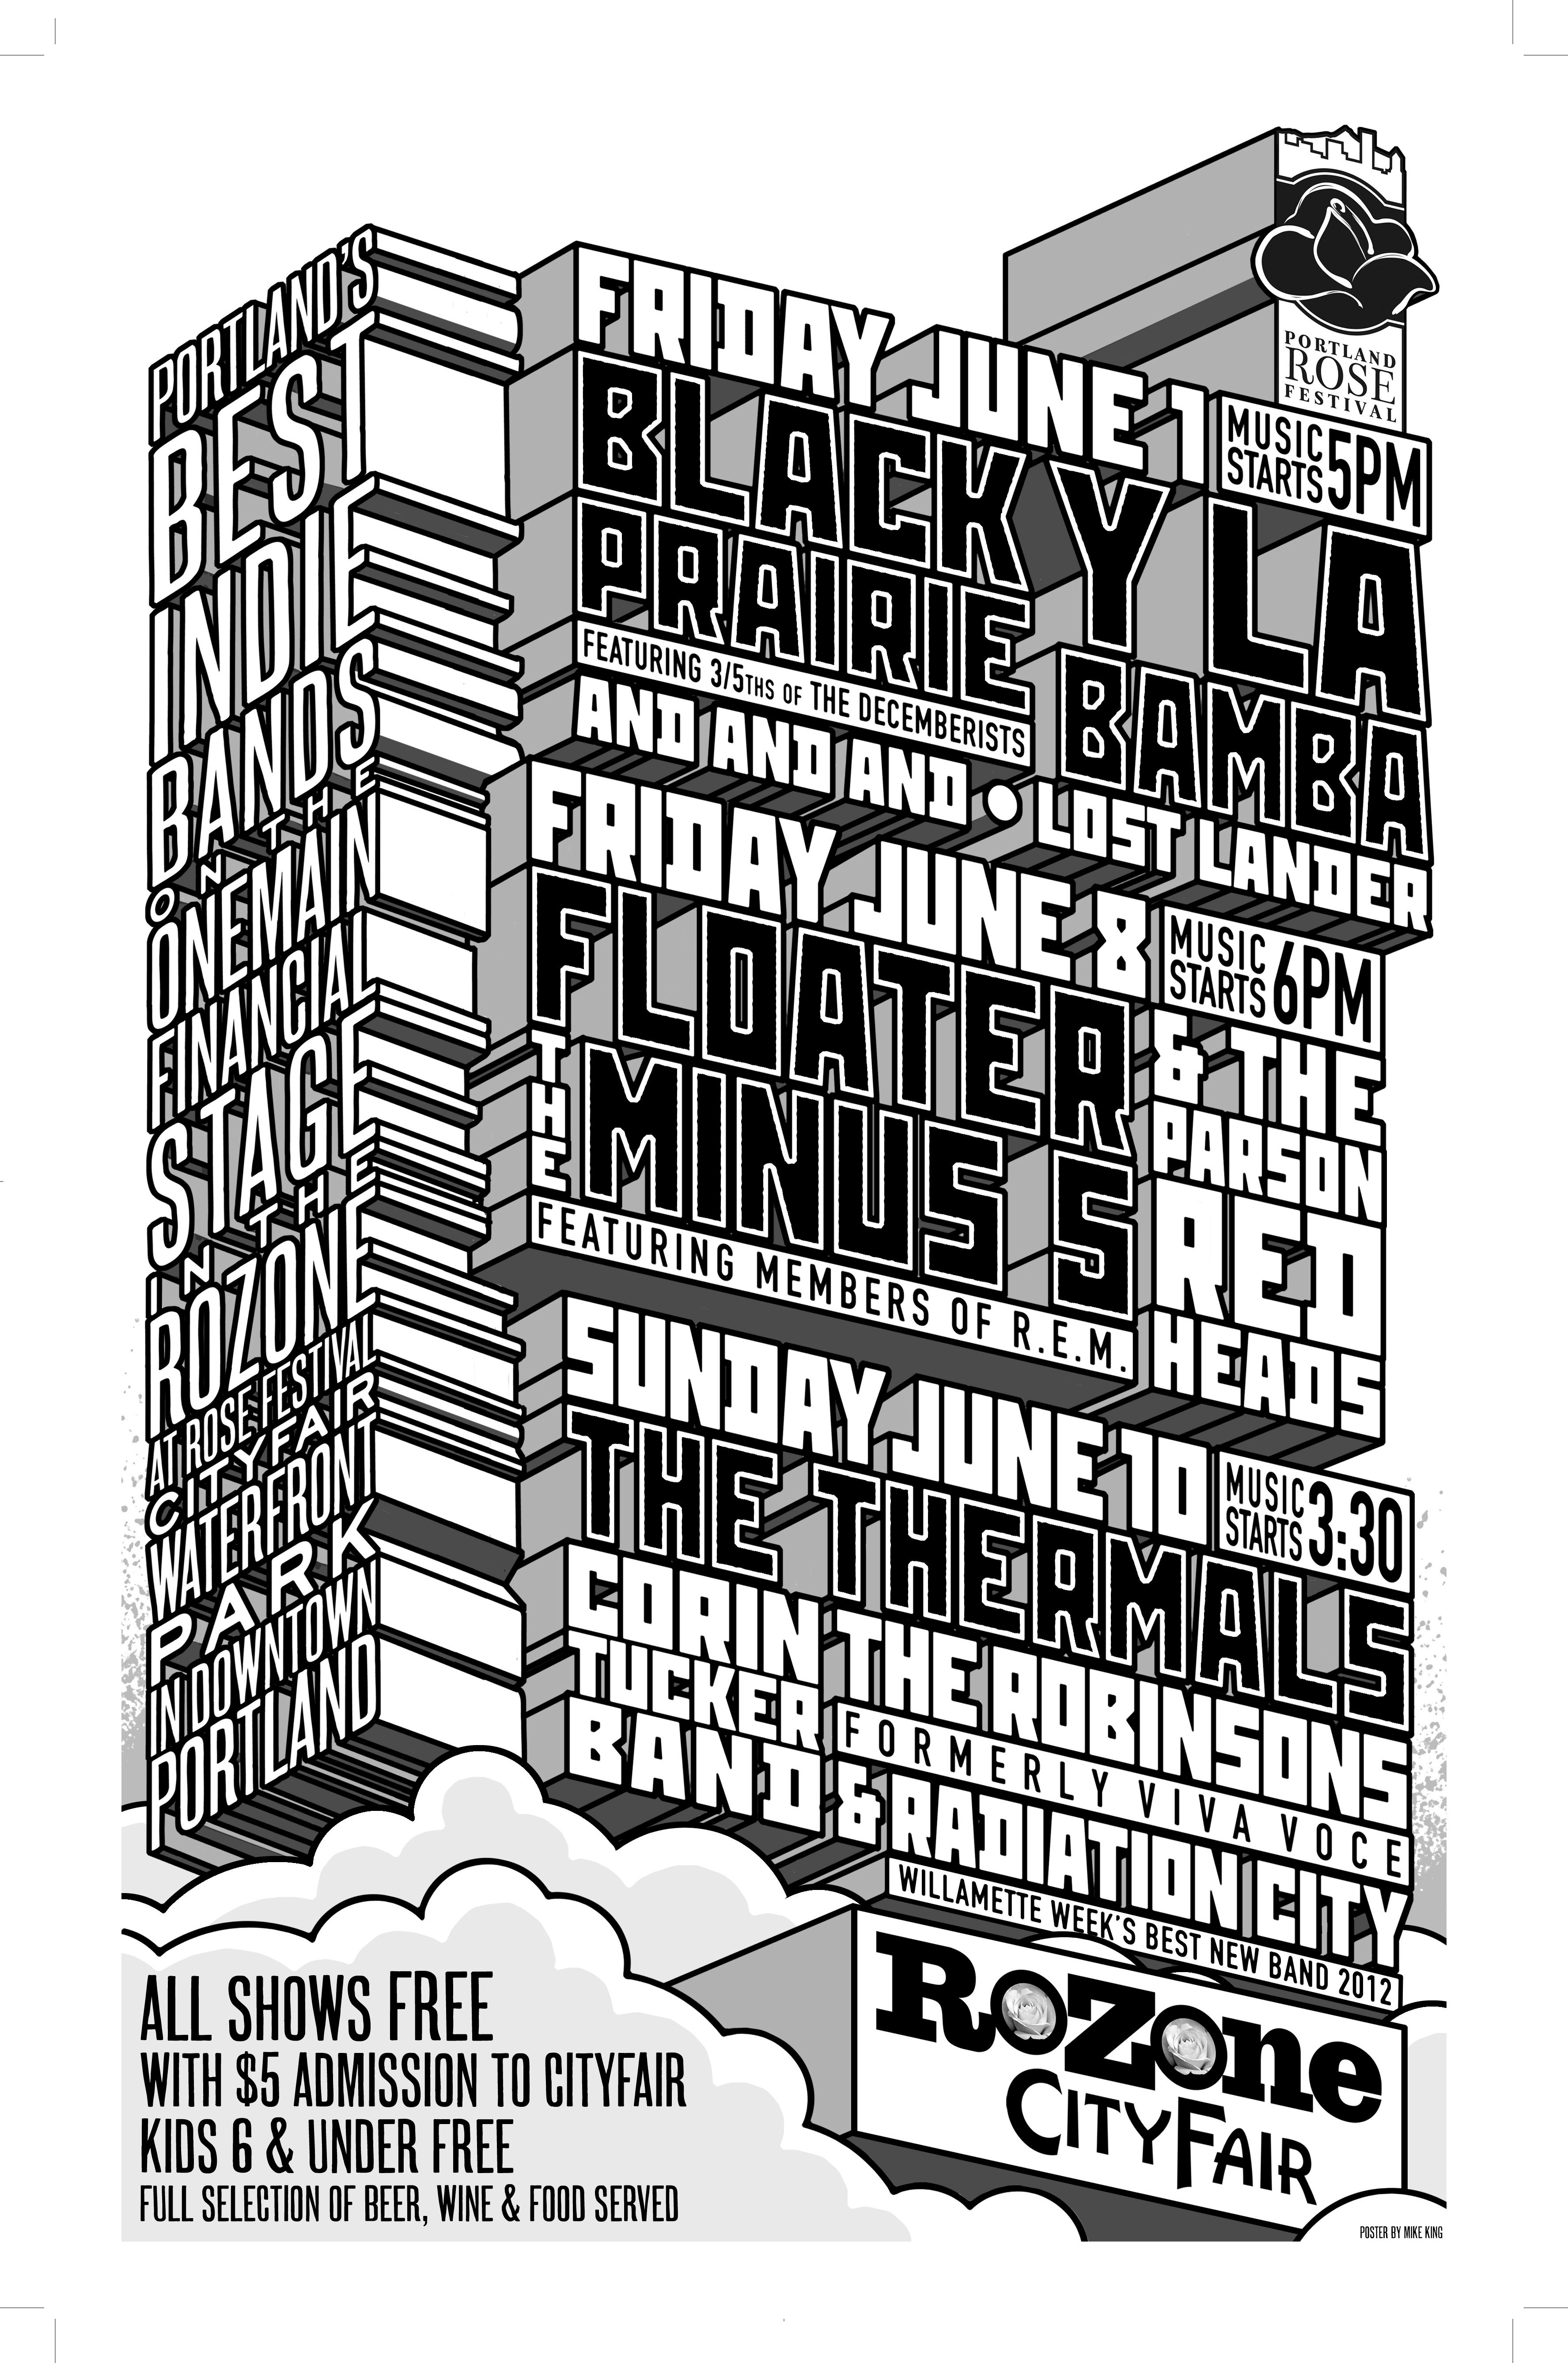 MXP-140.22 Portland Rose Festival Tom McCall Waterfront Park 2012 Concert Poster